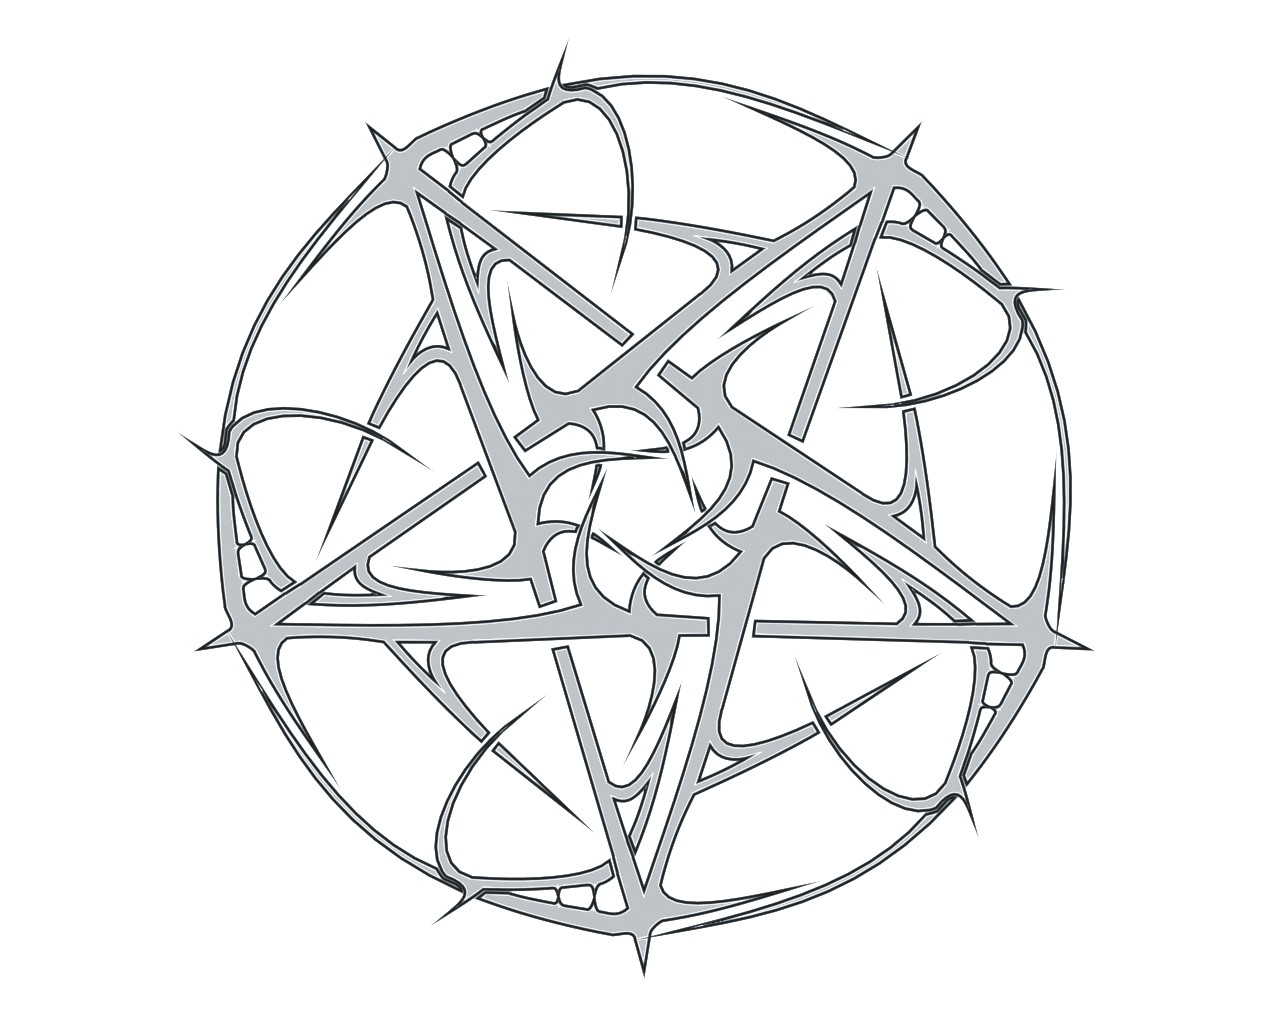 Just another pentagram